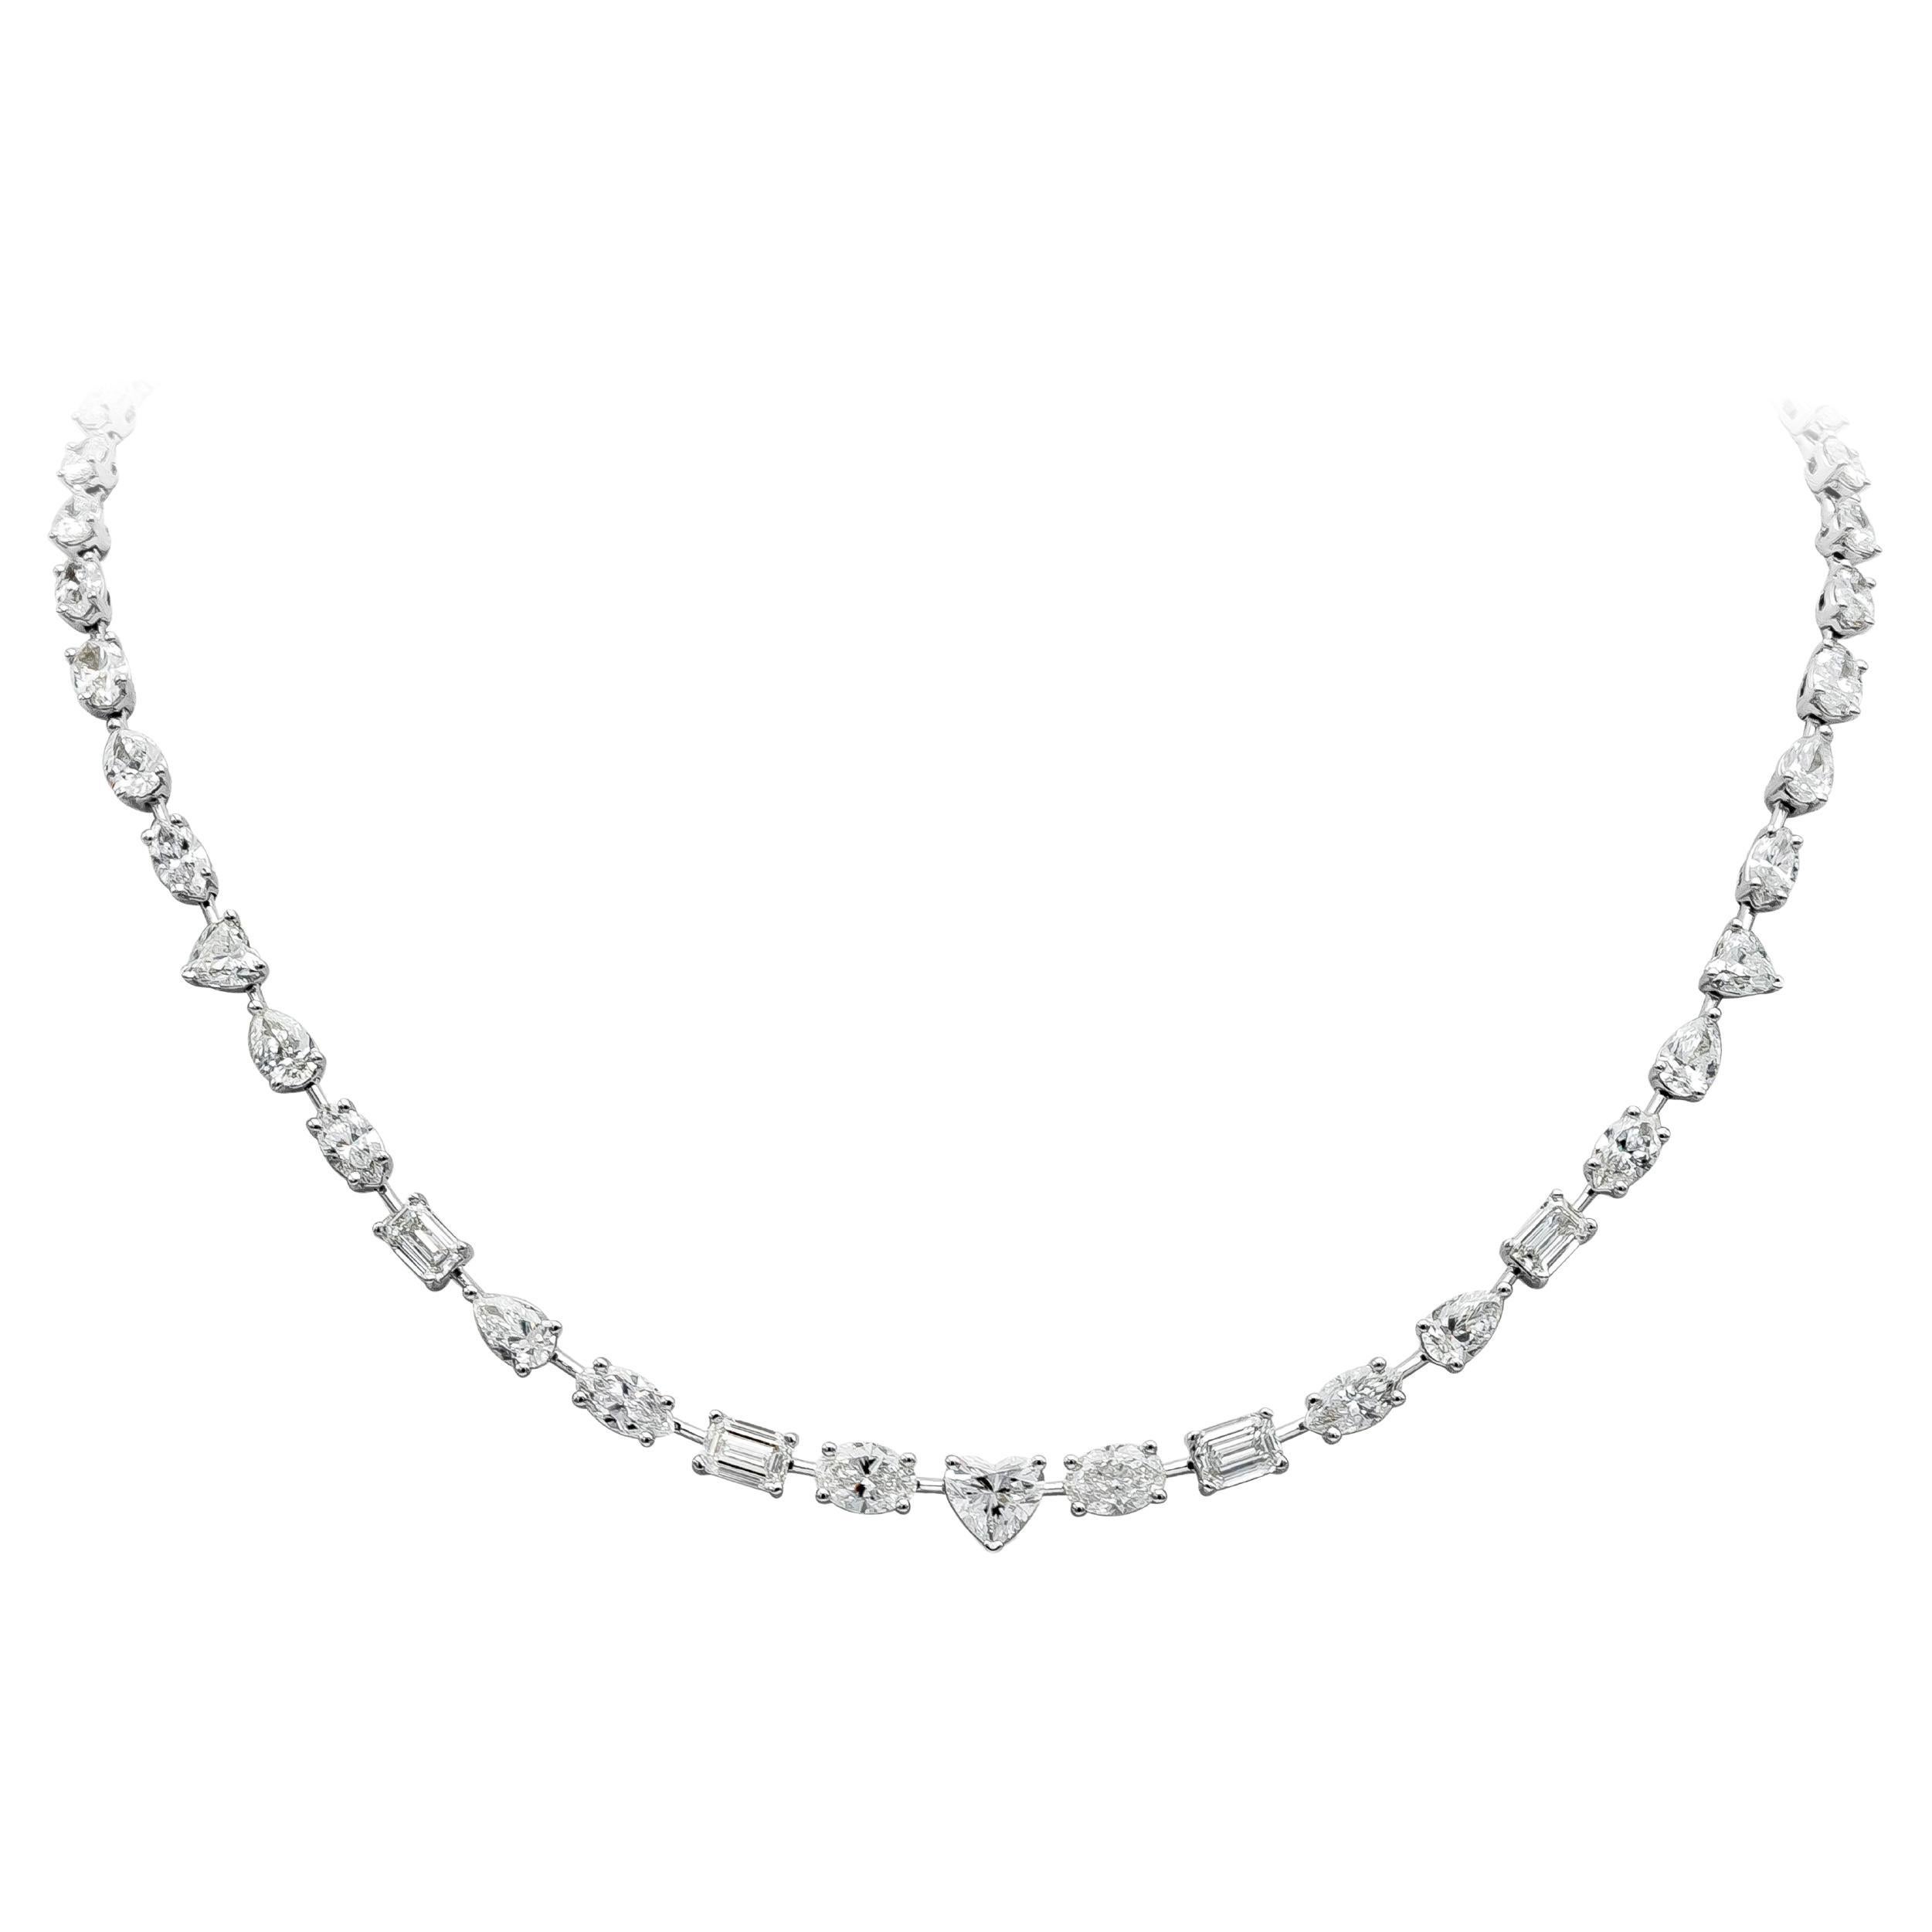 Roman Malakov 20.42 Carat Total Mix Cut Diamond Tennis Necklace in White Gold For Sale